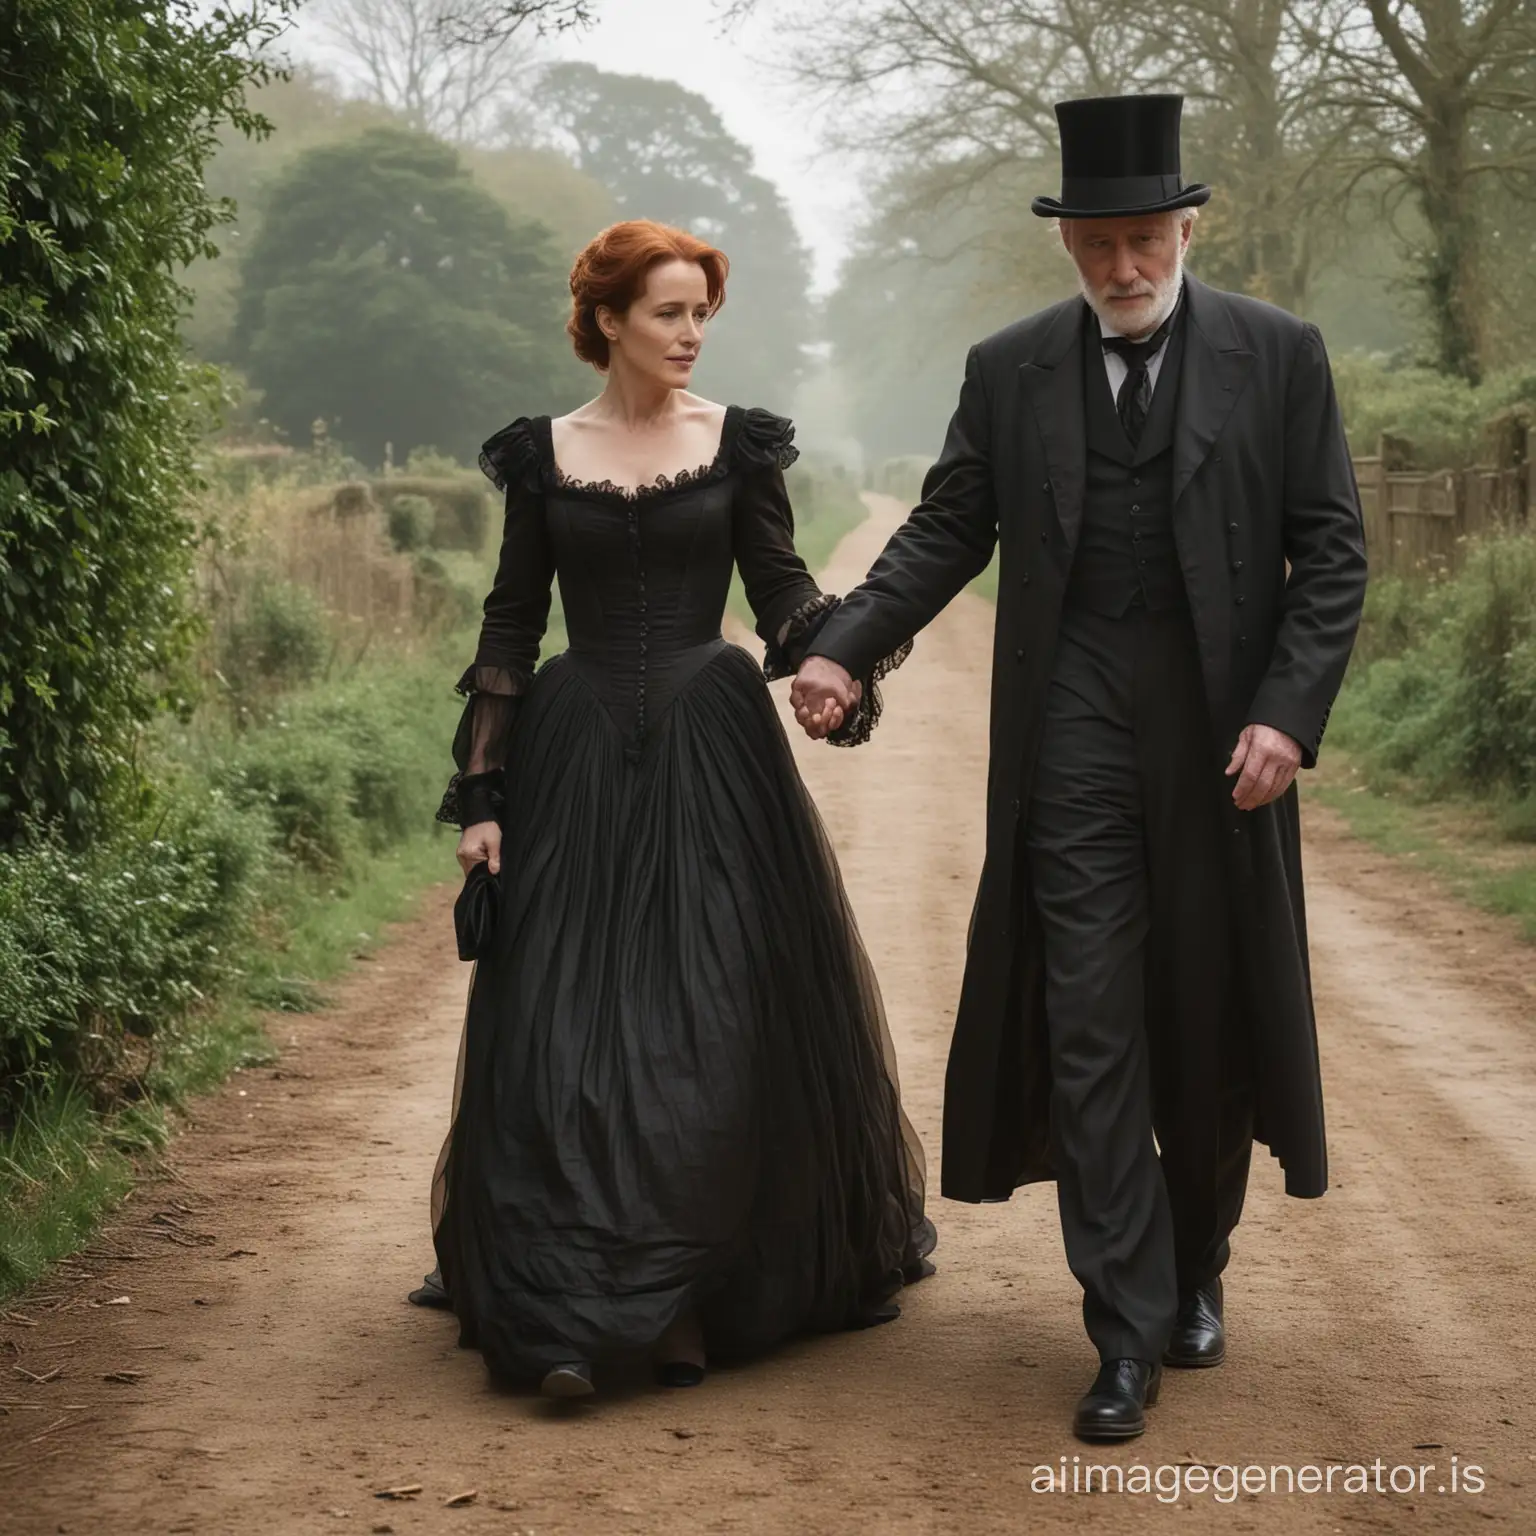 Elegant-Victorian-Newlyweds-Strolling-Hand-in-Hand